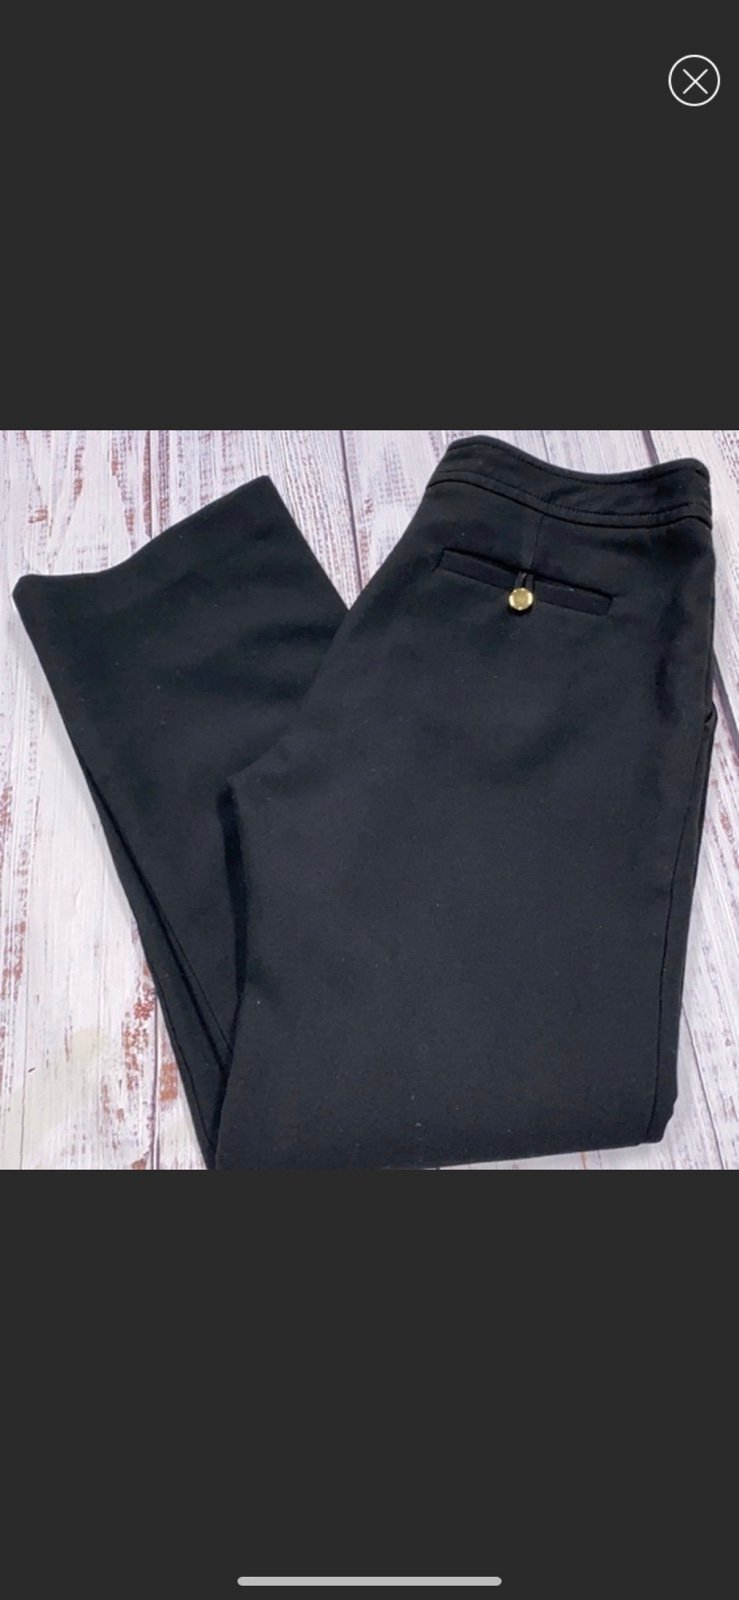 Buy Trina Turk black pants size 2 LerbbULYc Factory Pri